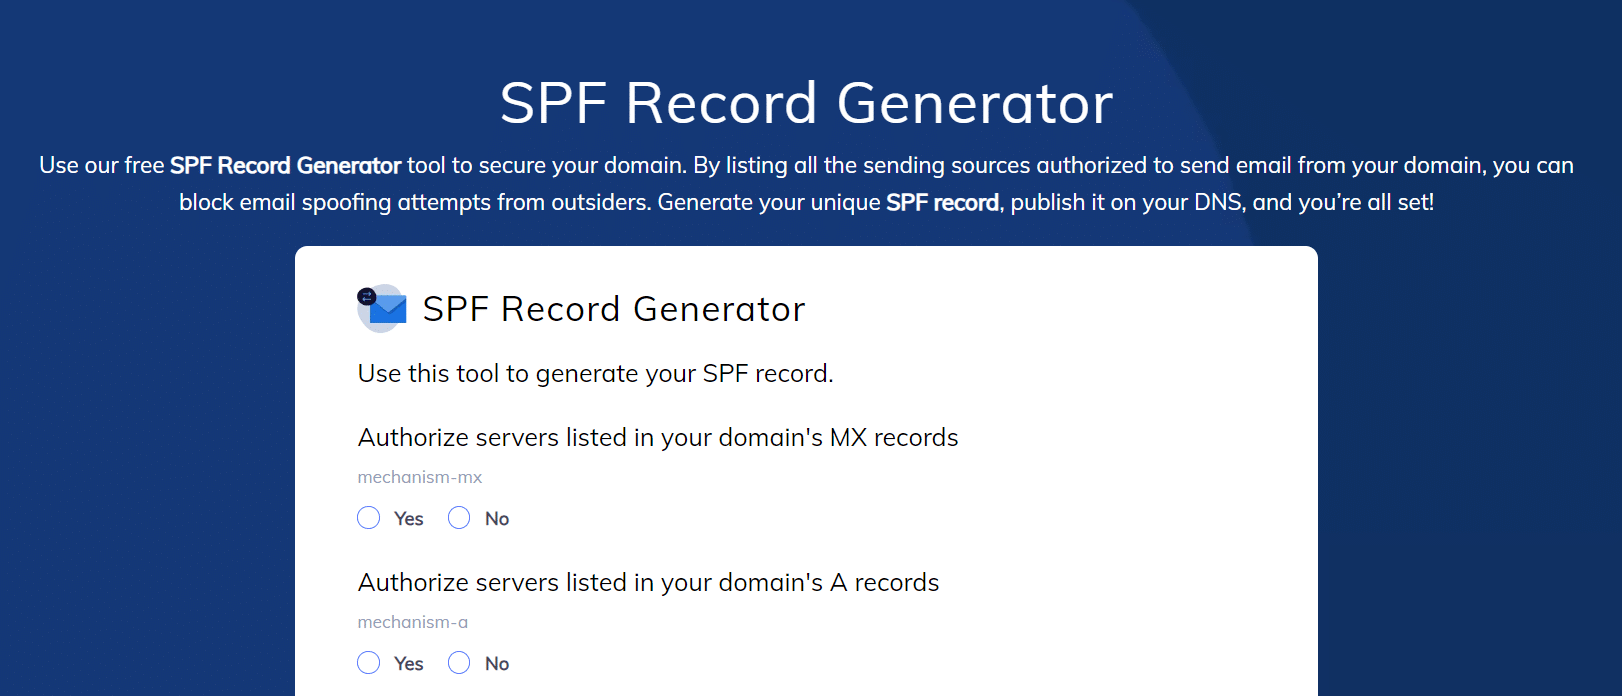 multiple spf records